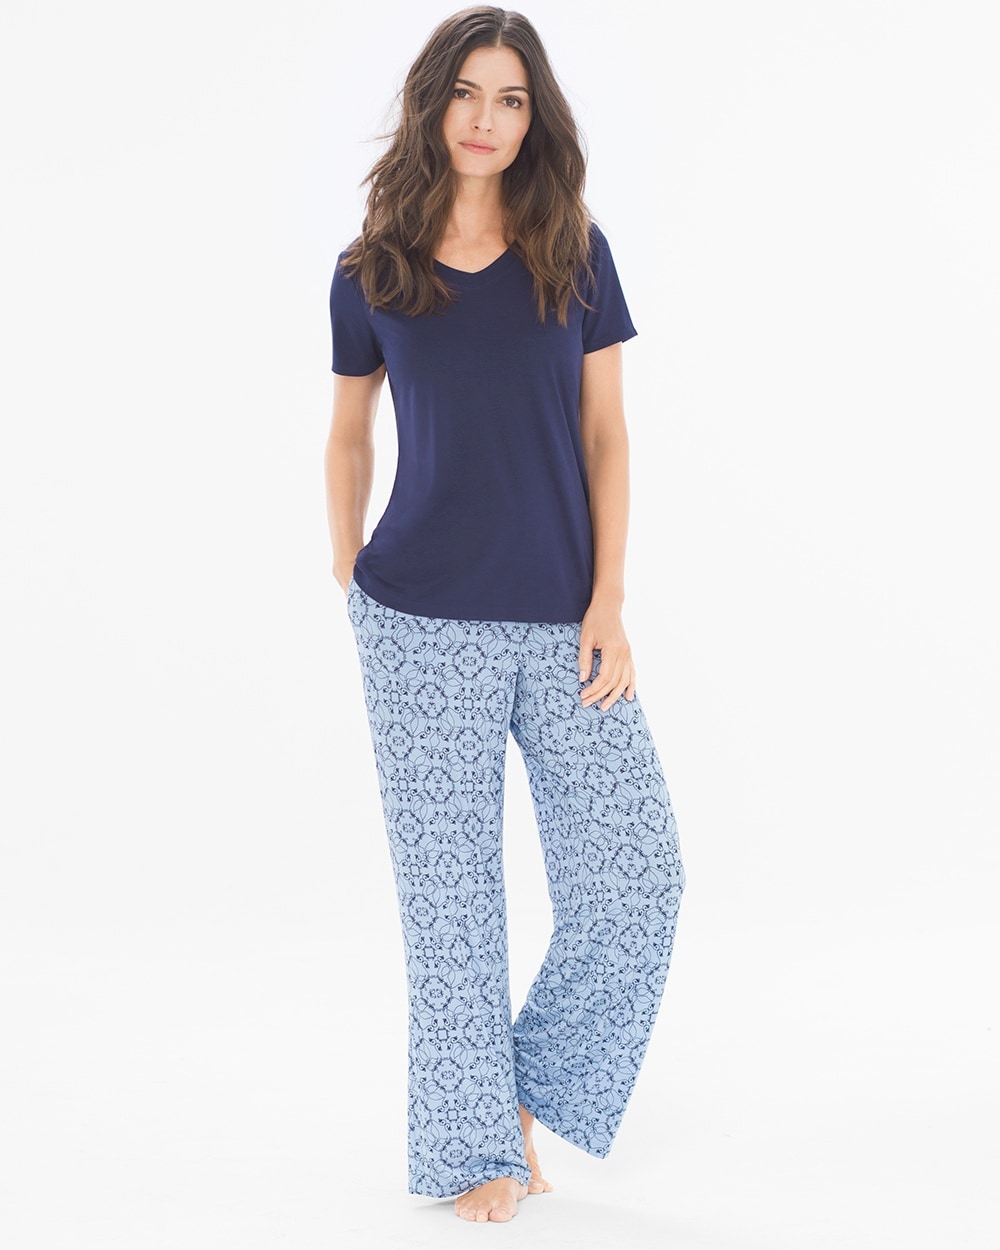 Cool Nights Short Sleeve Pajama Set Charming Tile Navy